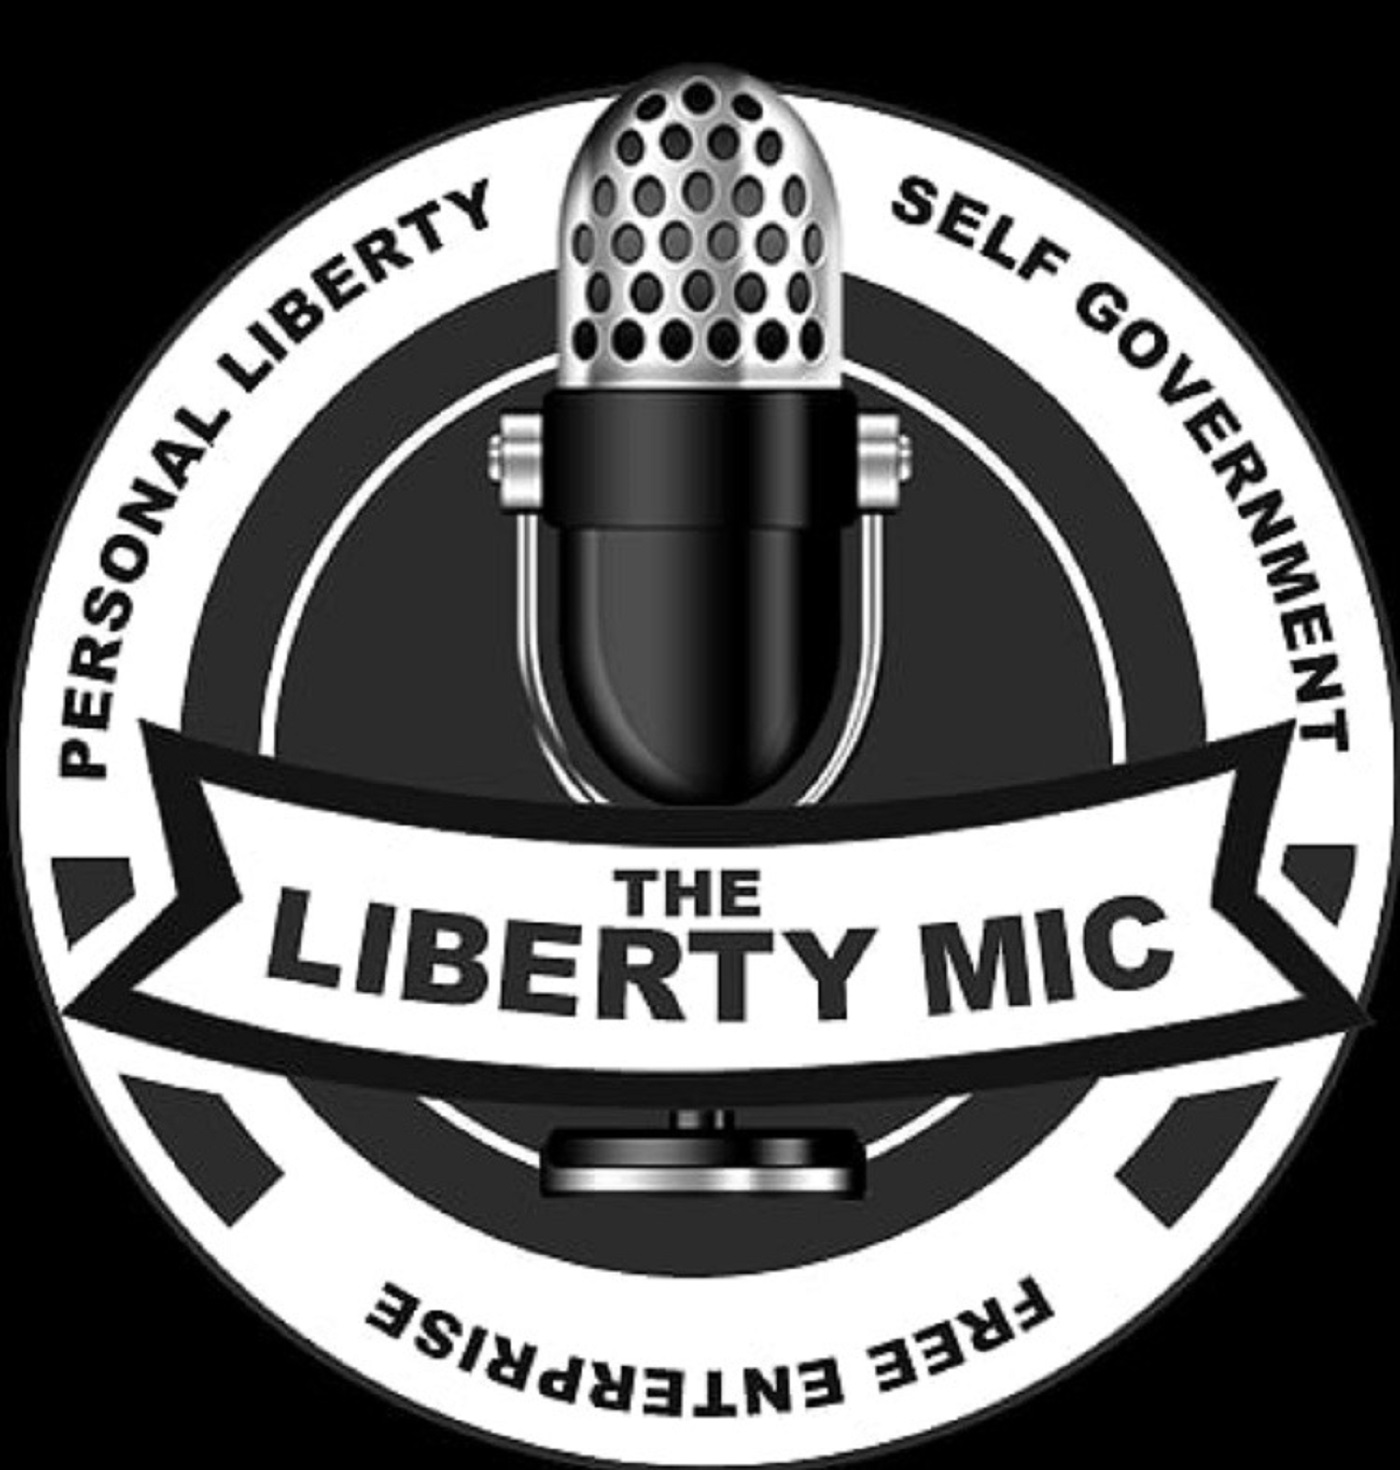 The Liberty Mic